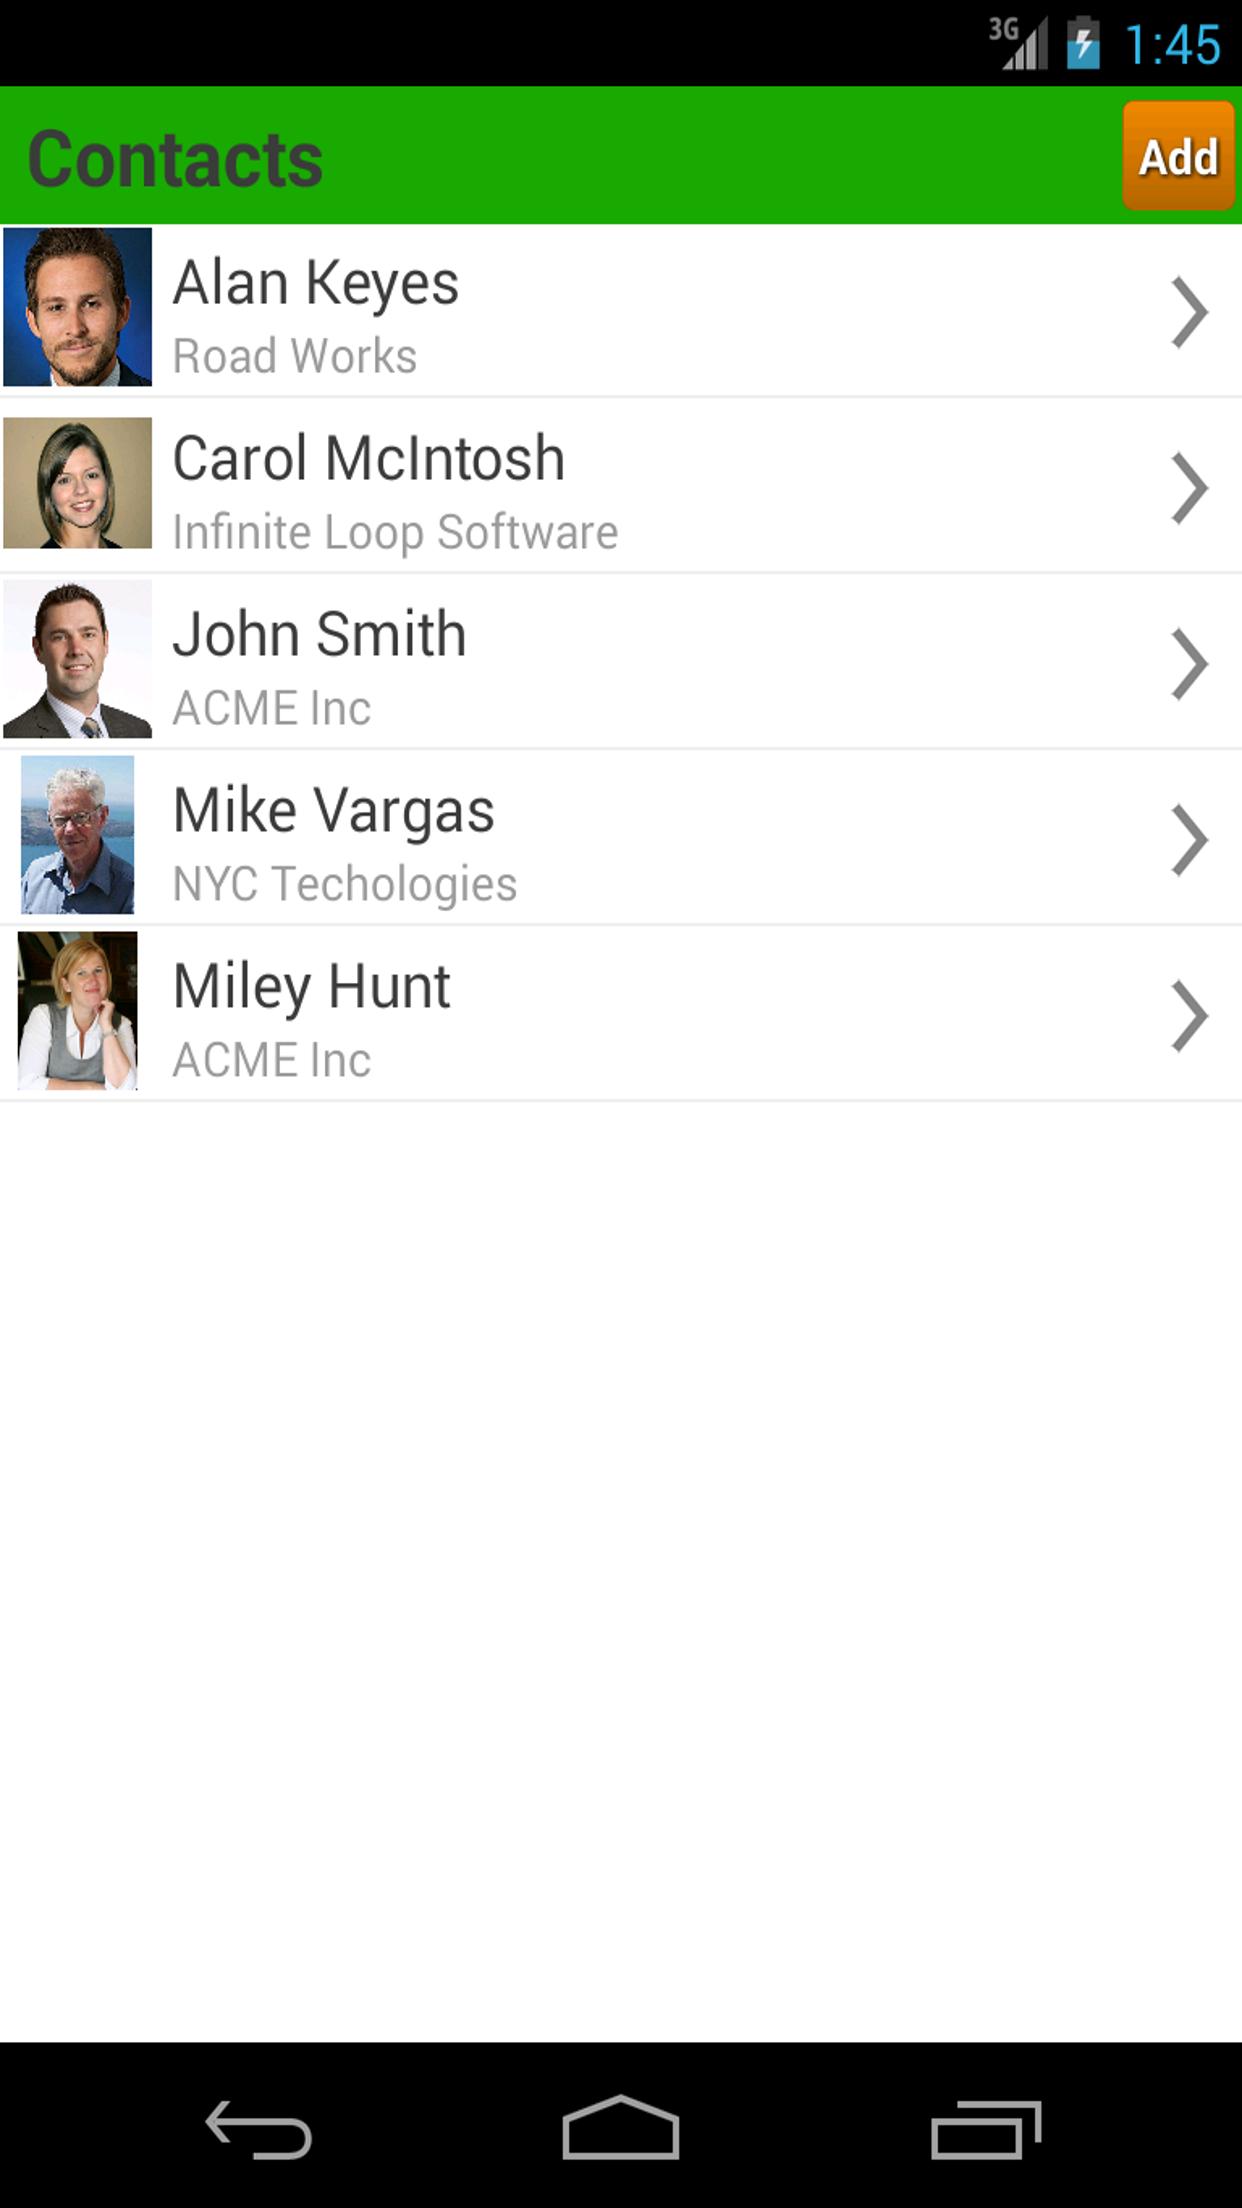 Appenate Mobile Client 4.73 Screenshot 2